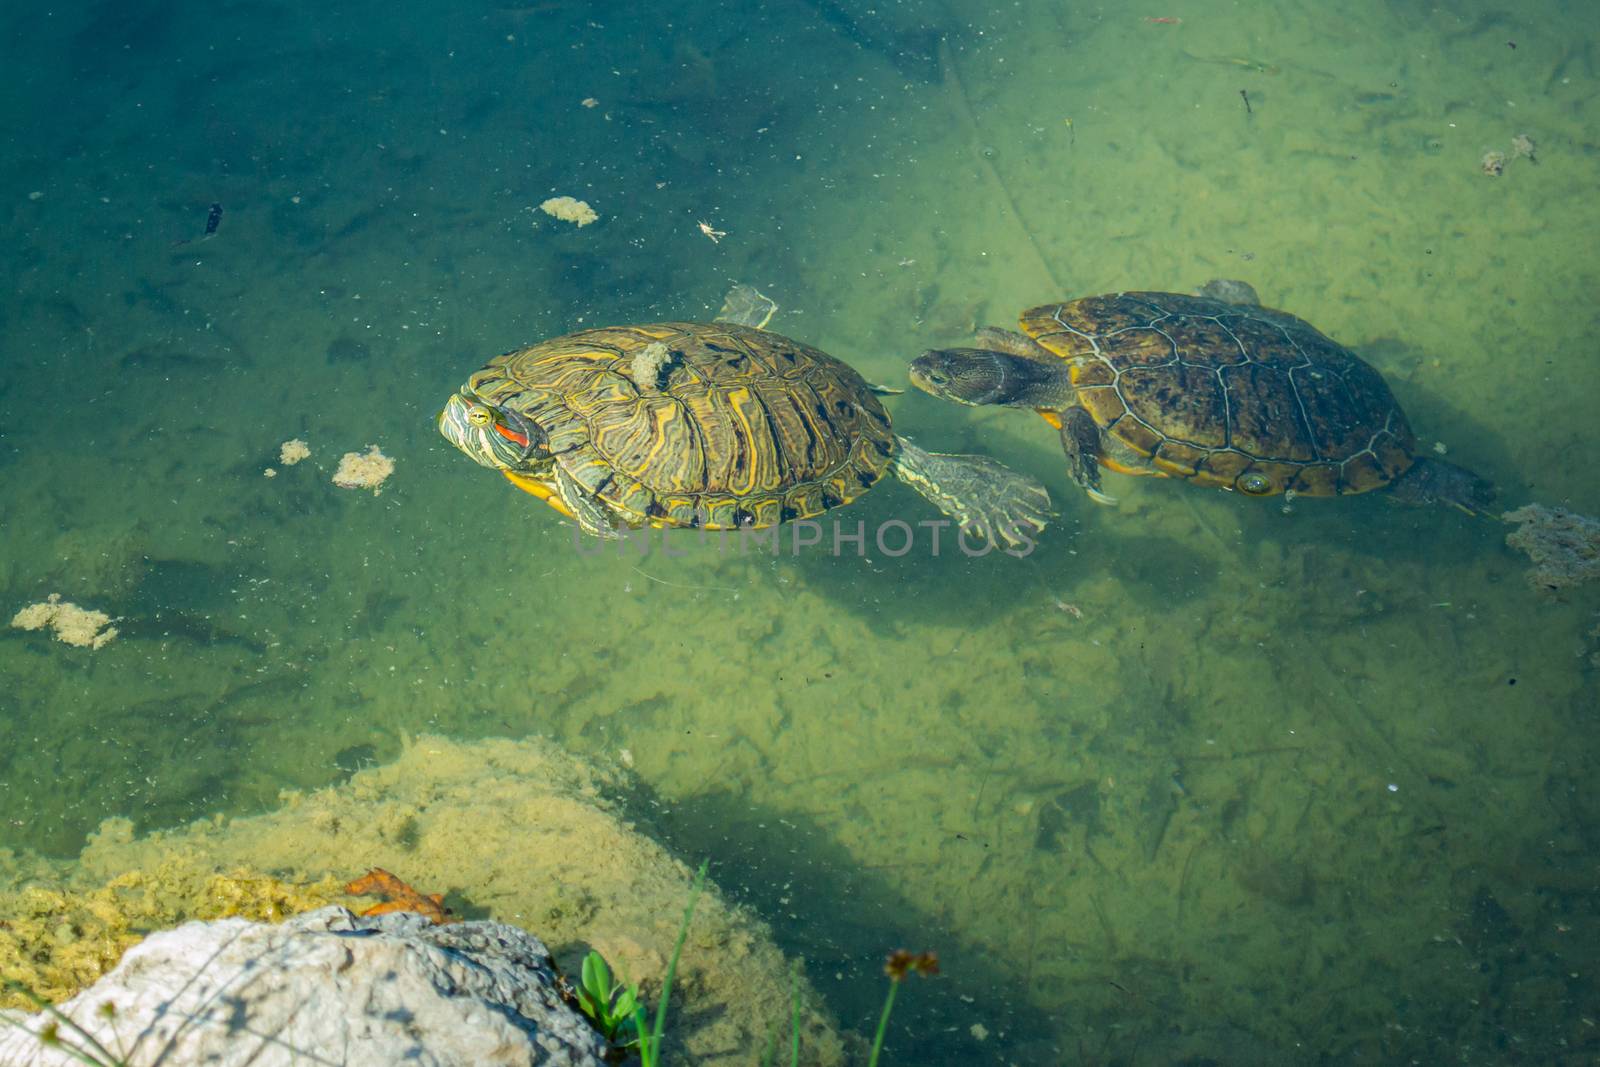 2 pond slider turtles (Trachemys scripta) are swimming in a pond by AlonaGryadovaya